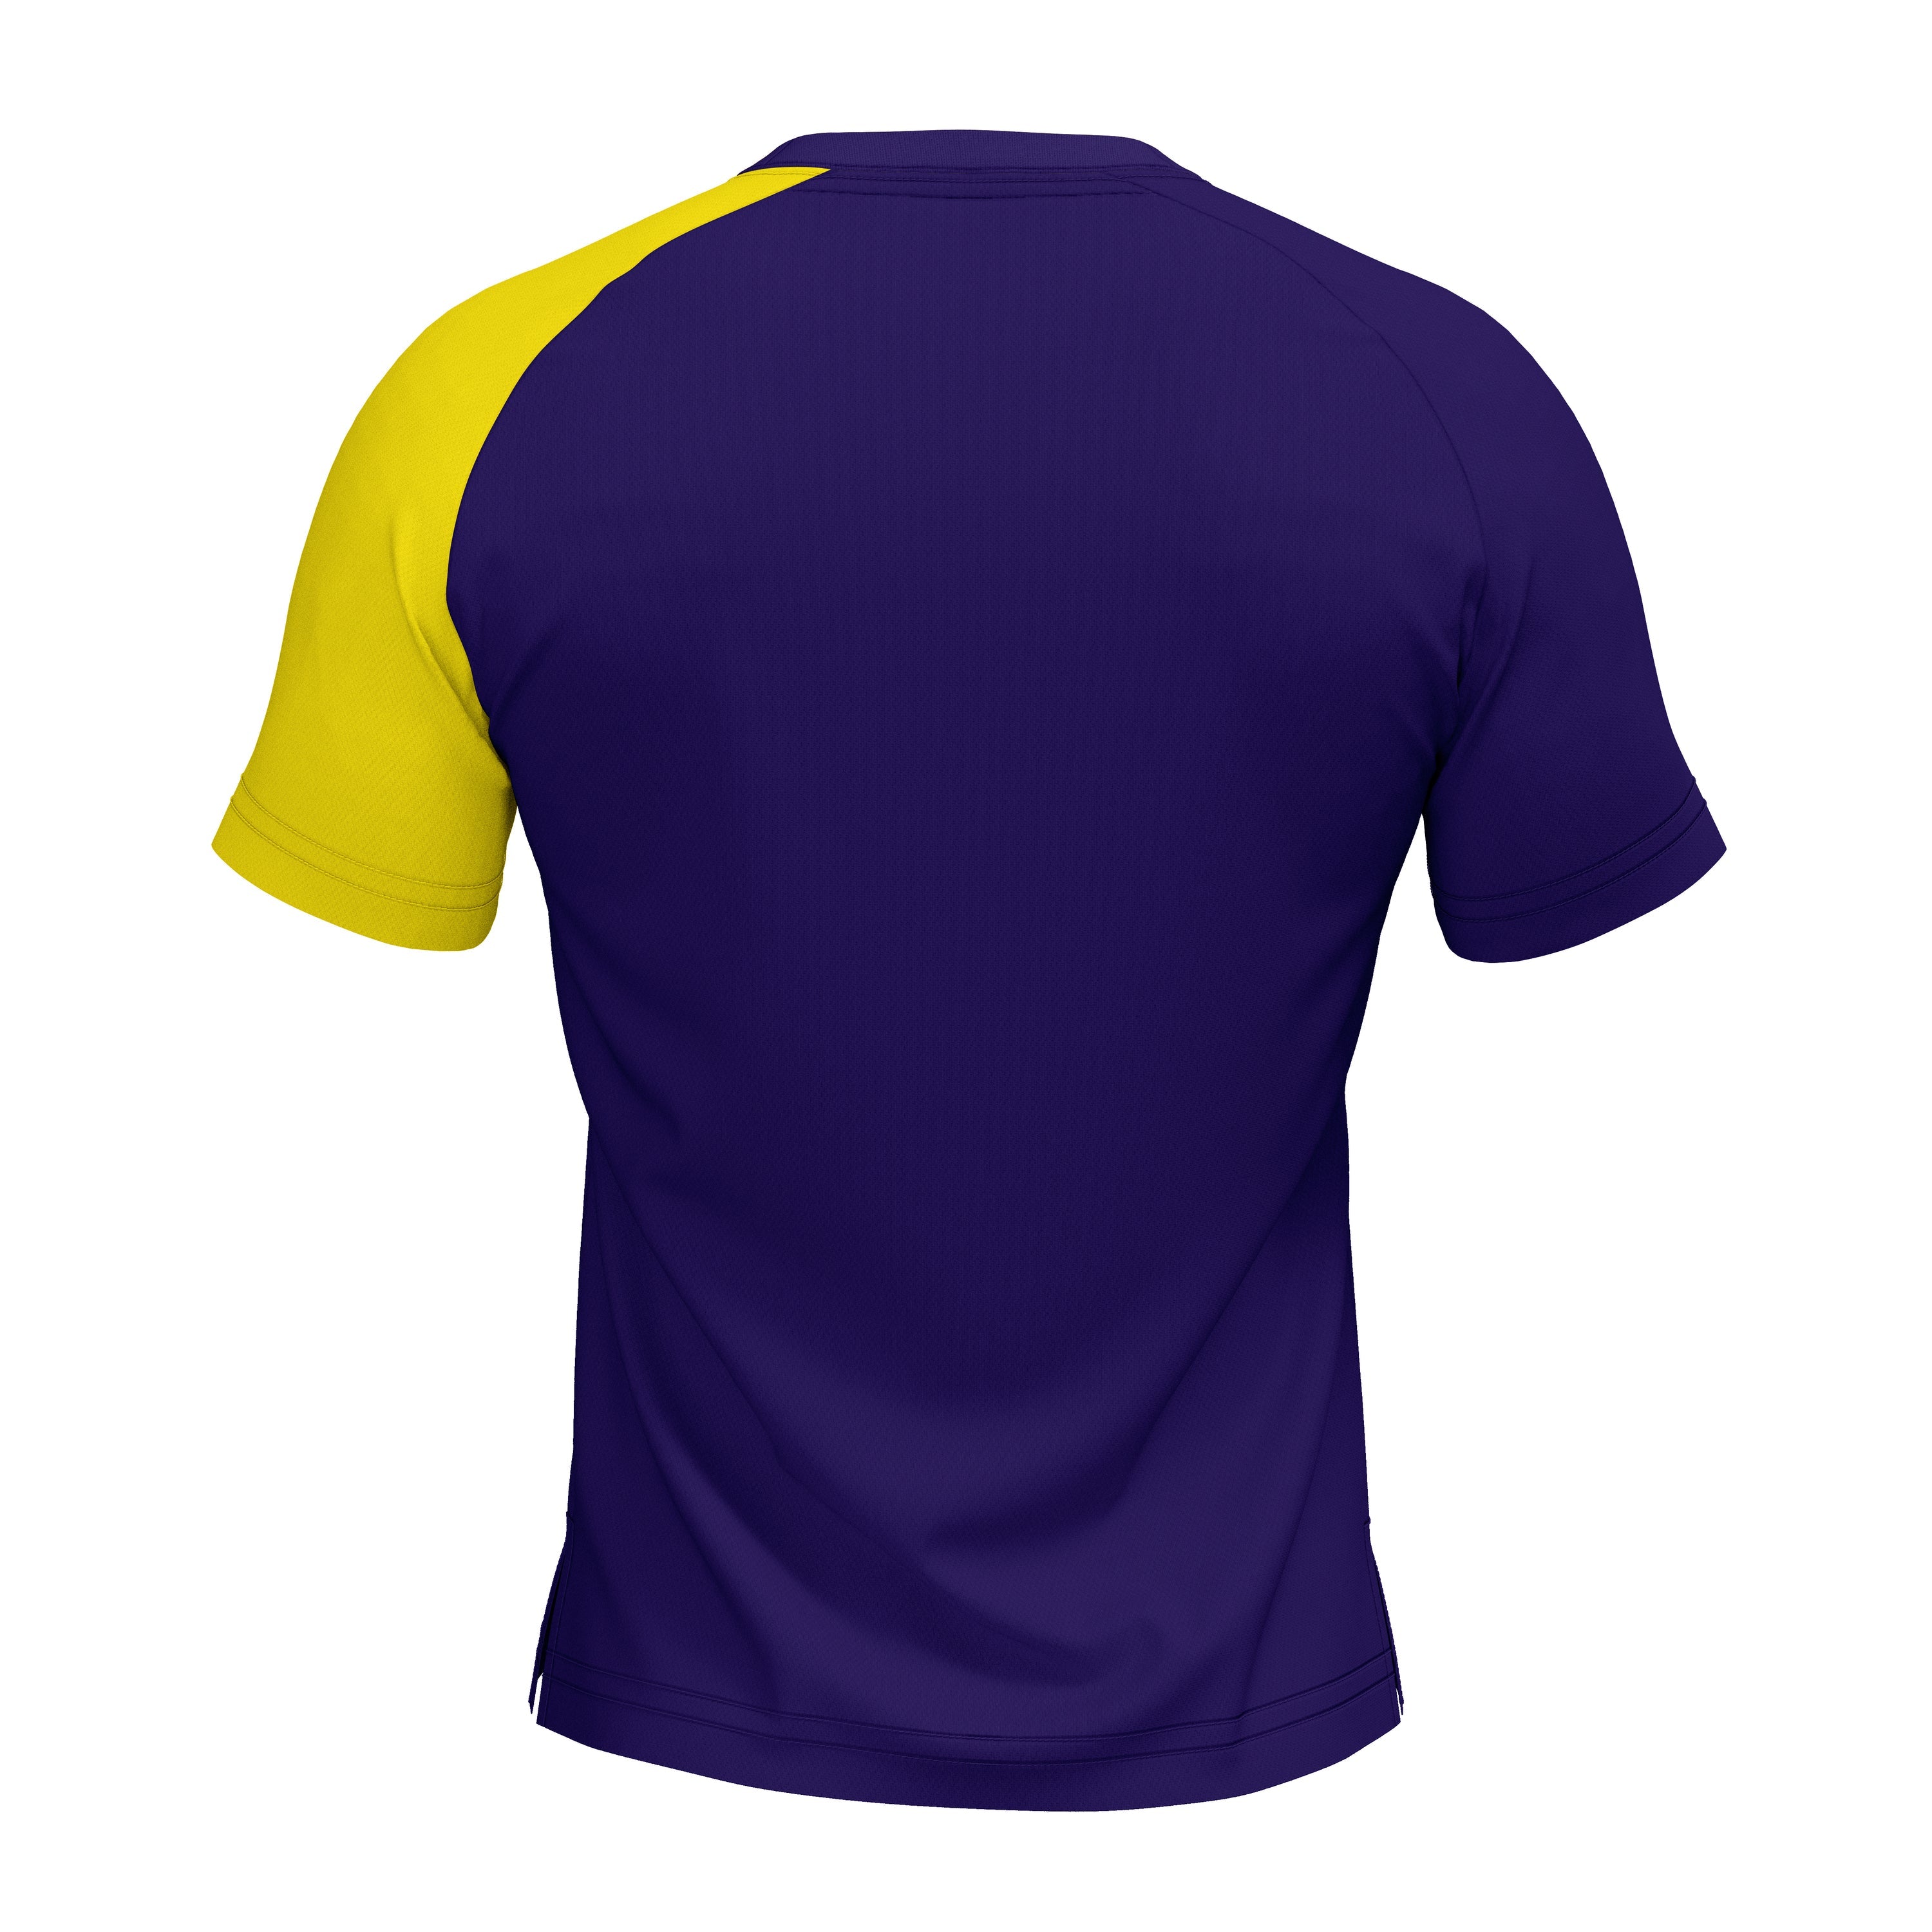 Mizuno Dri-Fit Active Wear T-Shirt (NAVY/YELLOW) – Badminton People